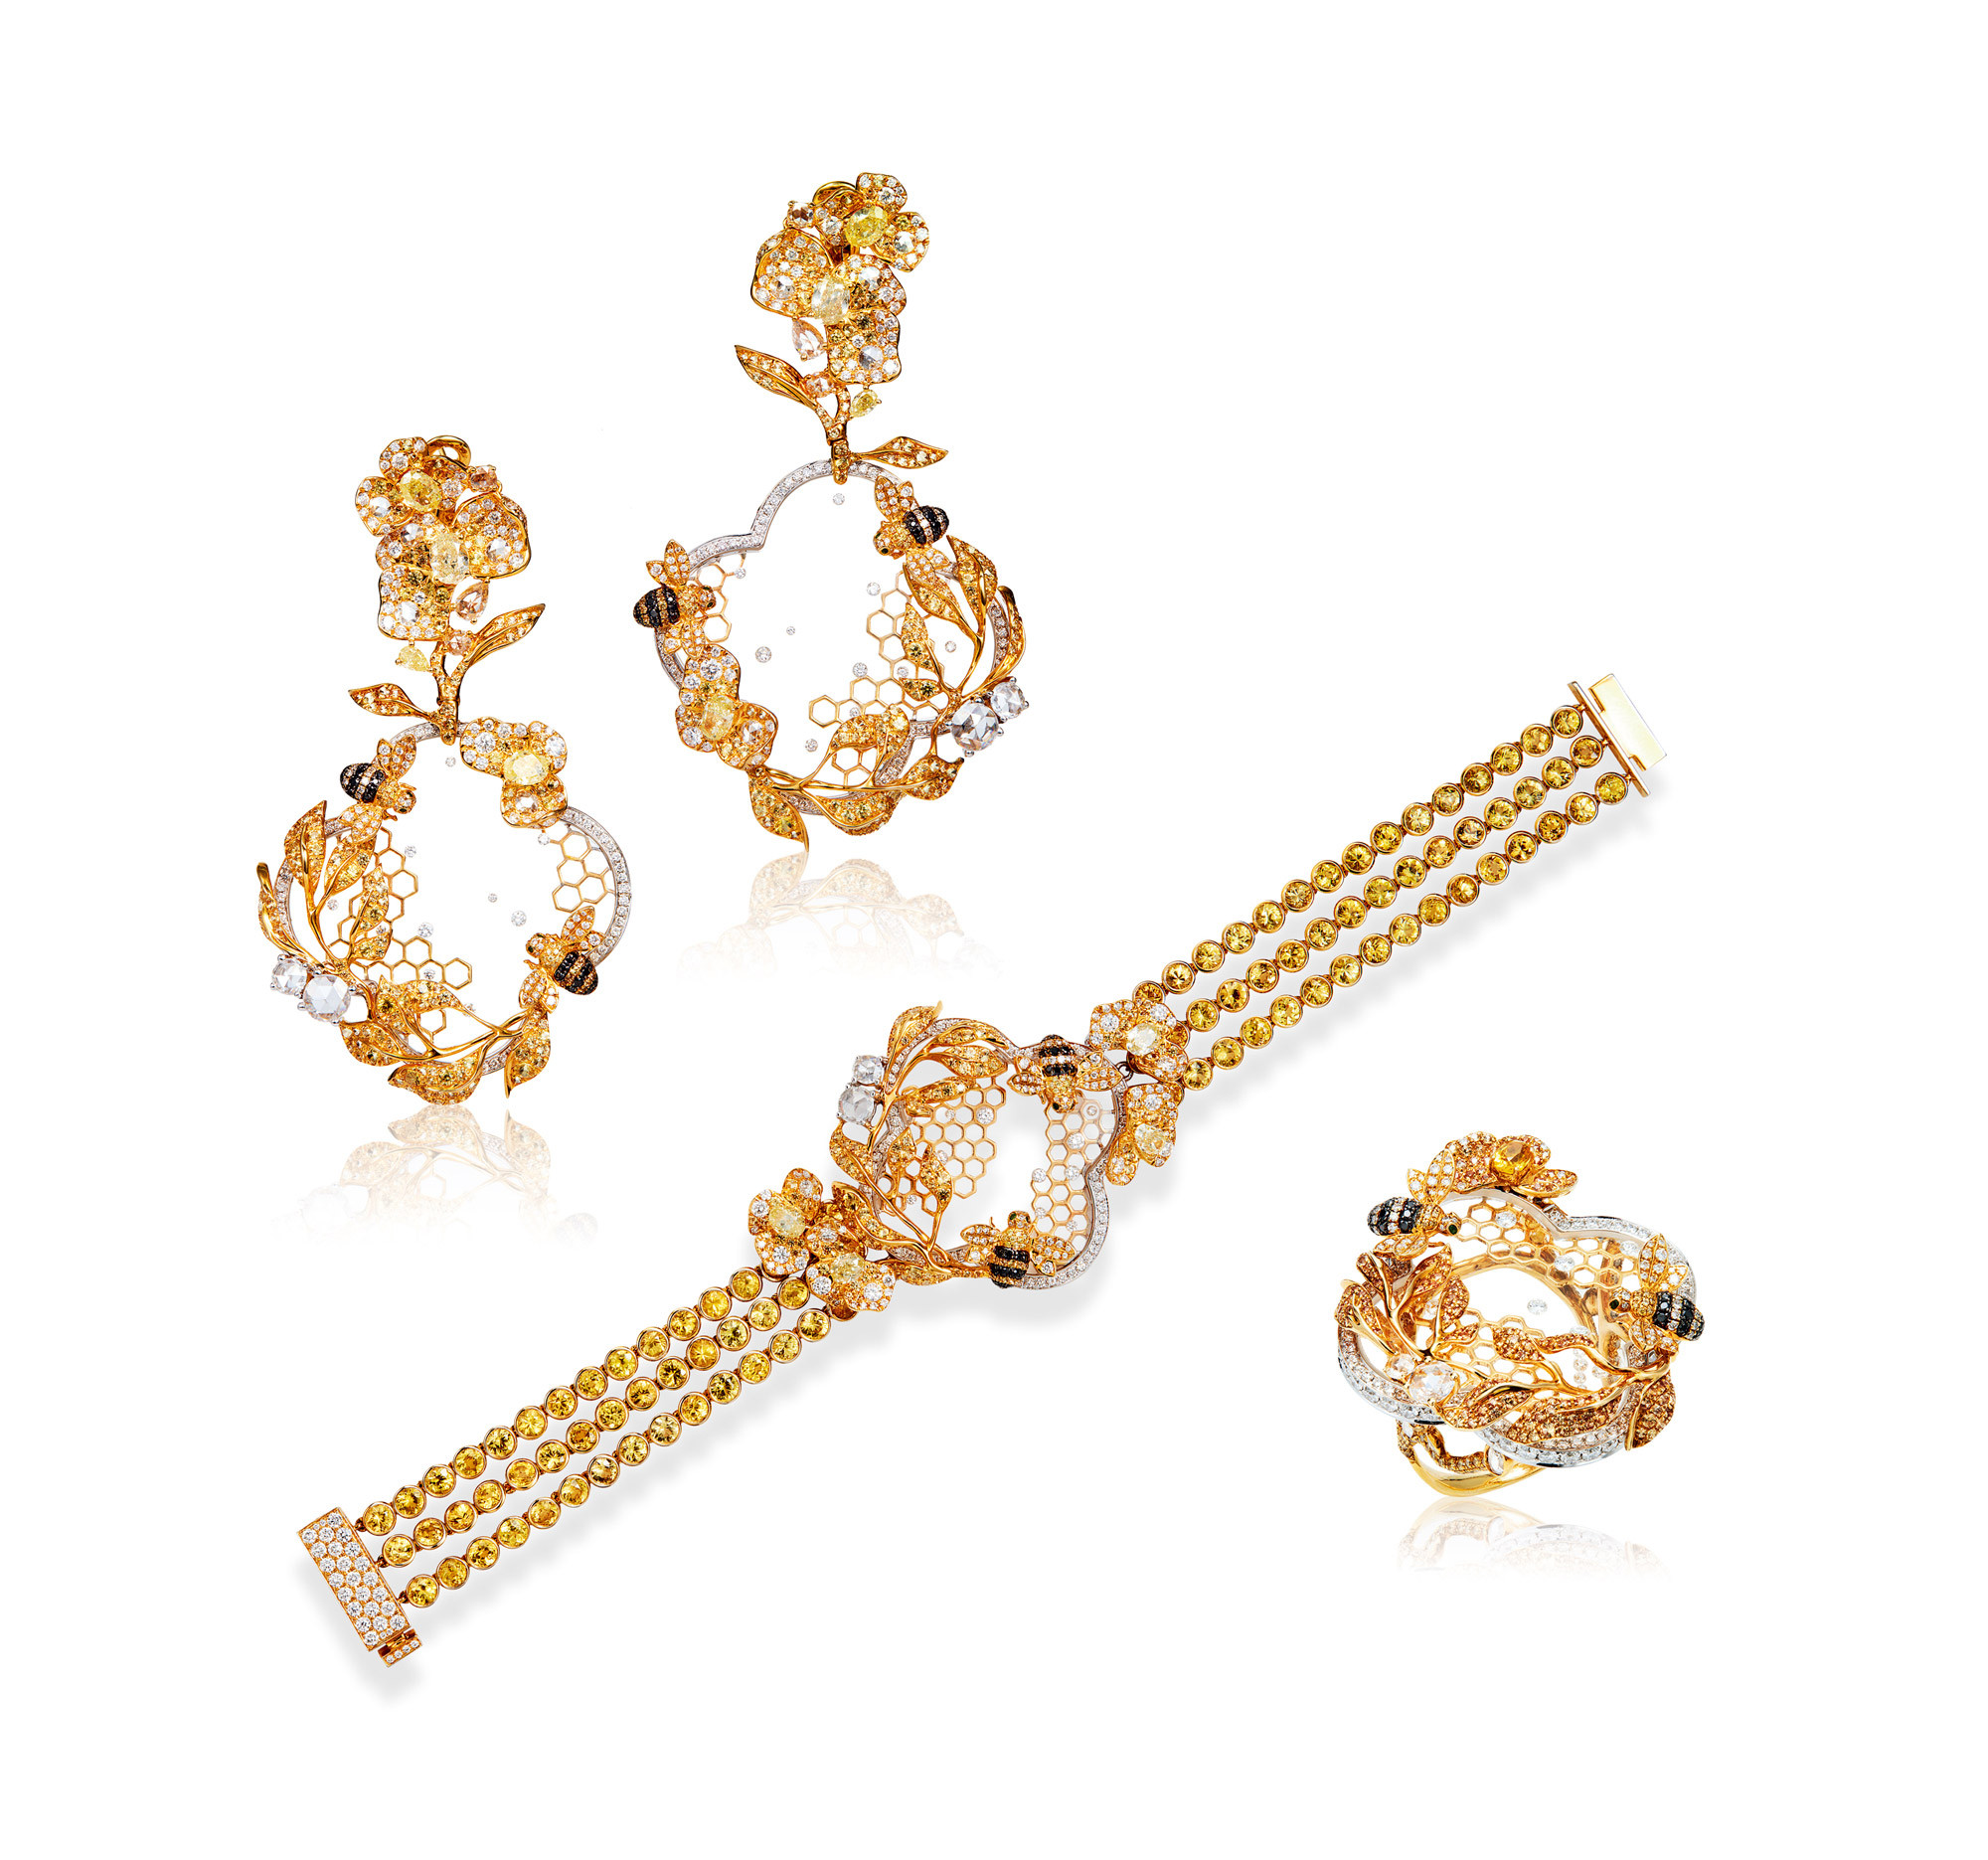 ’MANDARIN SEASONS -GOLDEN GLOW’ A SET OF DIAMOND, COLORED STONE JEWELRY, DESIGNED BY GE WENZHU